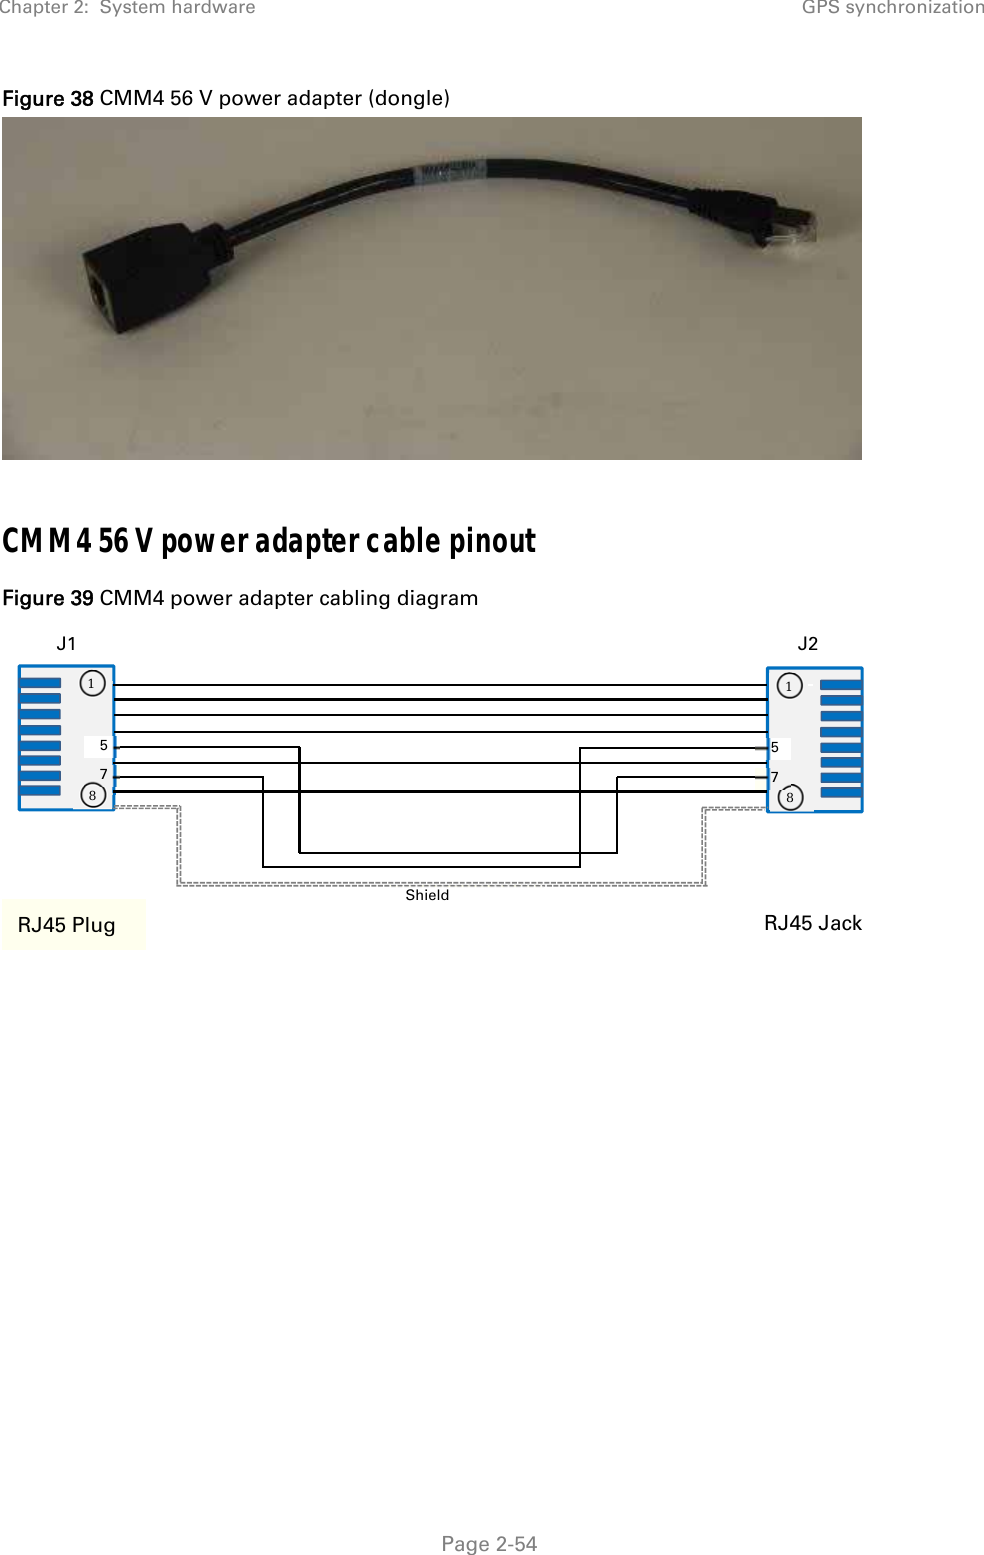 Chapter 2:  System hardware  GPS synchronization   Page 2-54 Figure 38 CMM4 56 V power adapter (dongle)   CMM4 56 V power adapter cable pinout Figure 39 CMM4 power adapter cabling diagram  1 8 1 8 J1  J2 RJ45 Plug  RJ45 Jack 5 7 5 7 Shield 